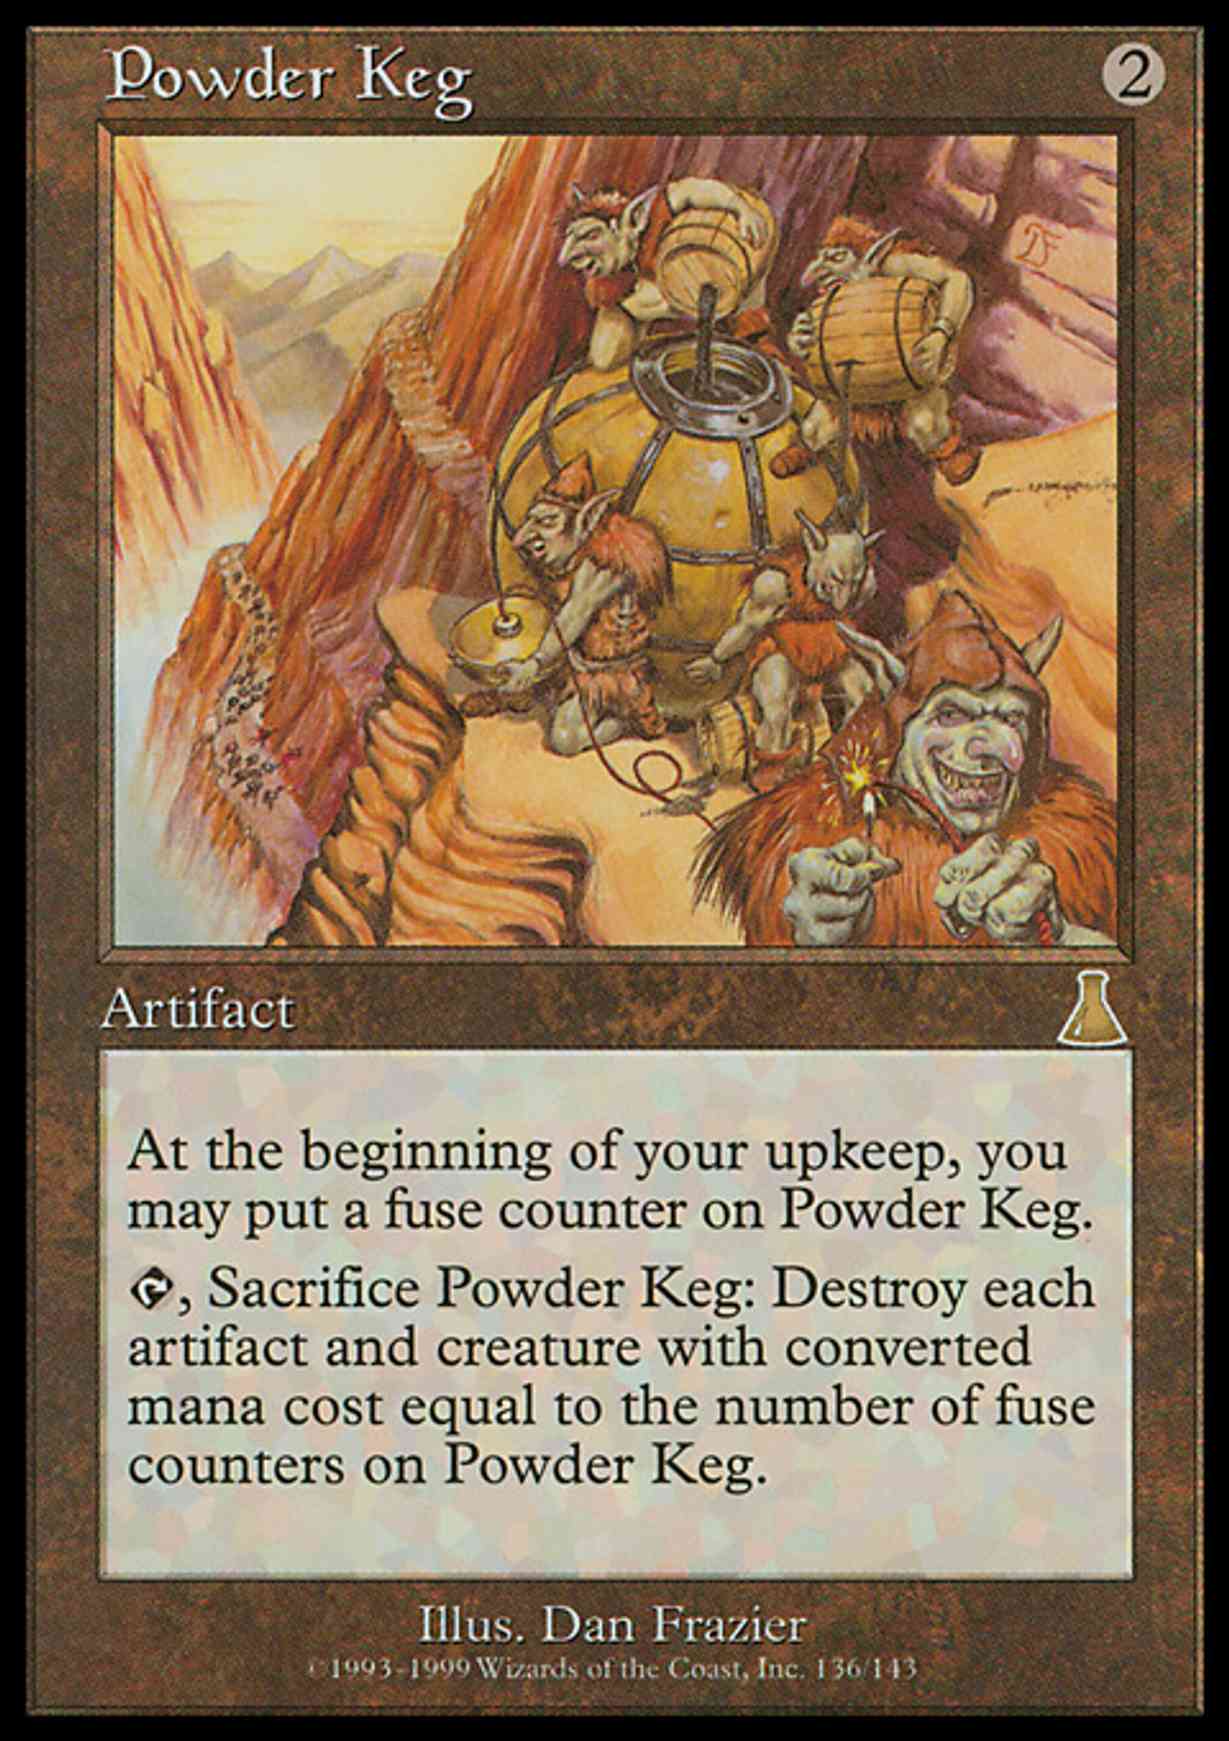 Powder Keg magic card front